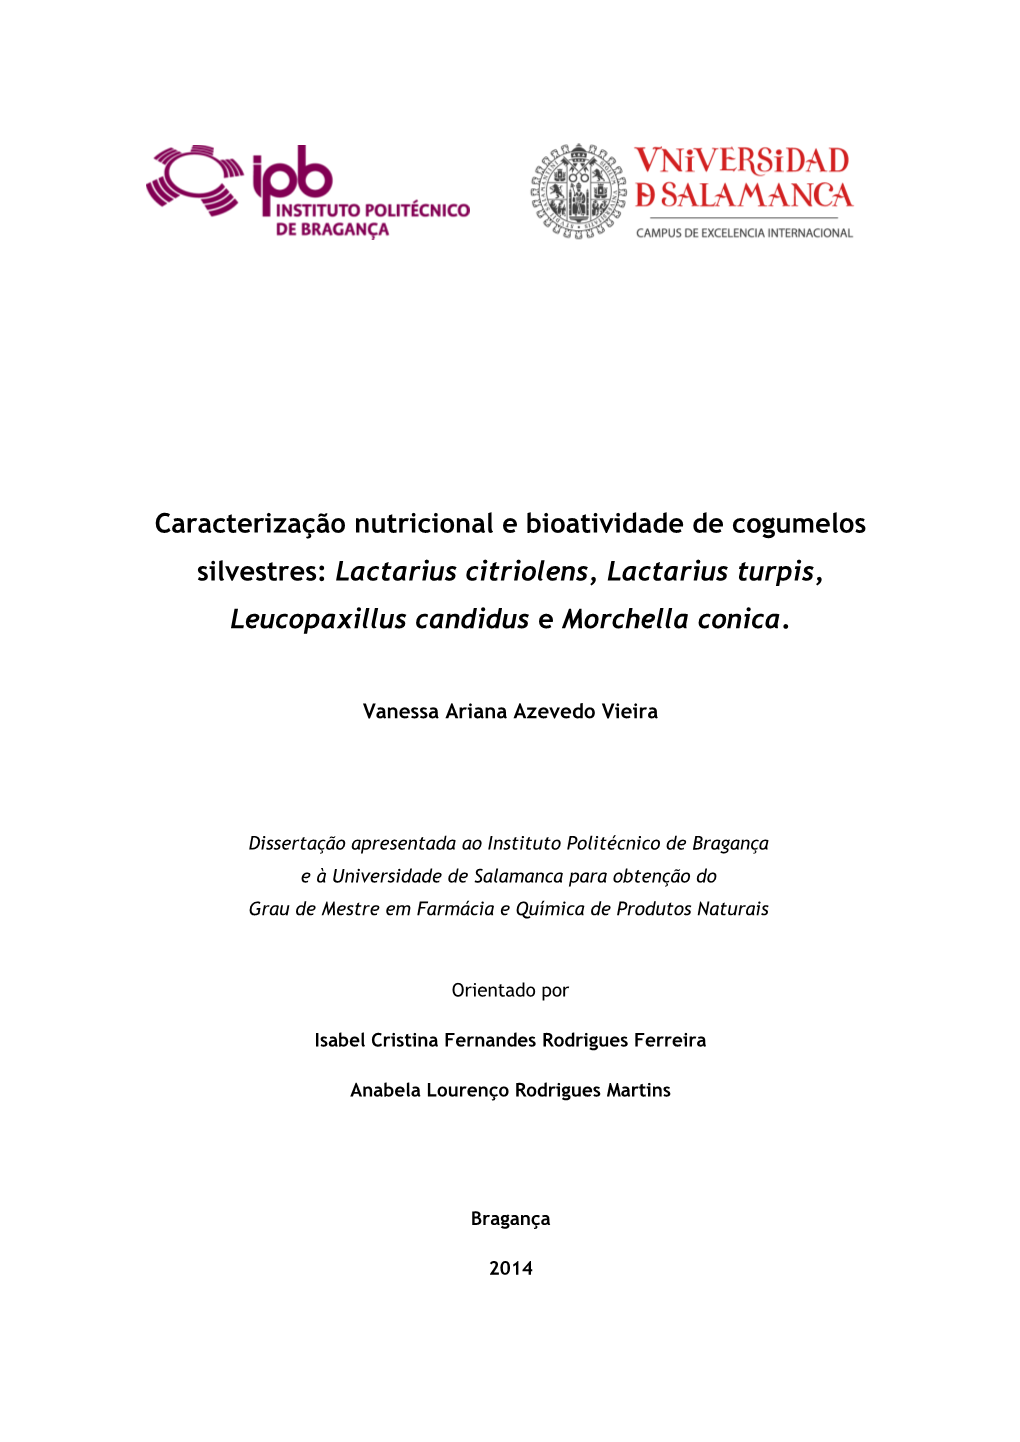 Caracterização Nutricional E Bioatividade De Cogumelos Silvestres: Lactarius Citriolens, Lactarius Turpis, Leucopaxillus Candidus E Morchella Conica